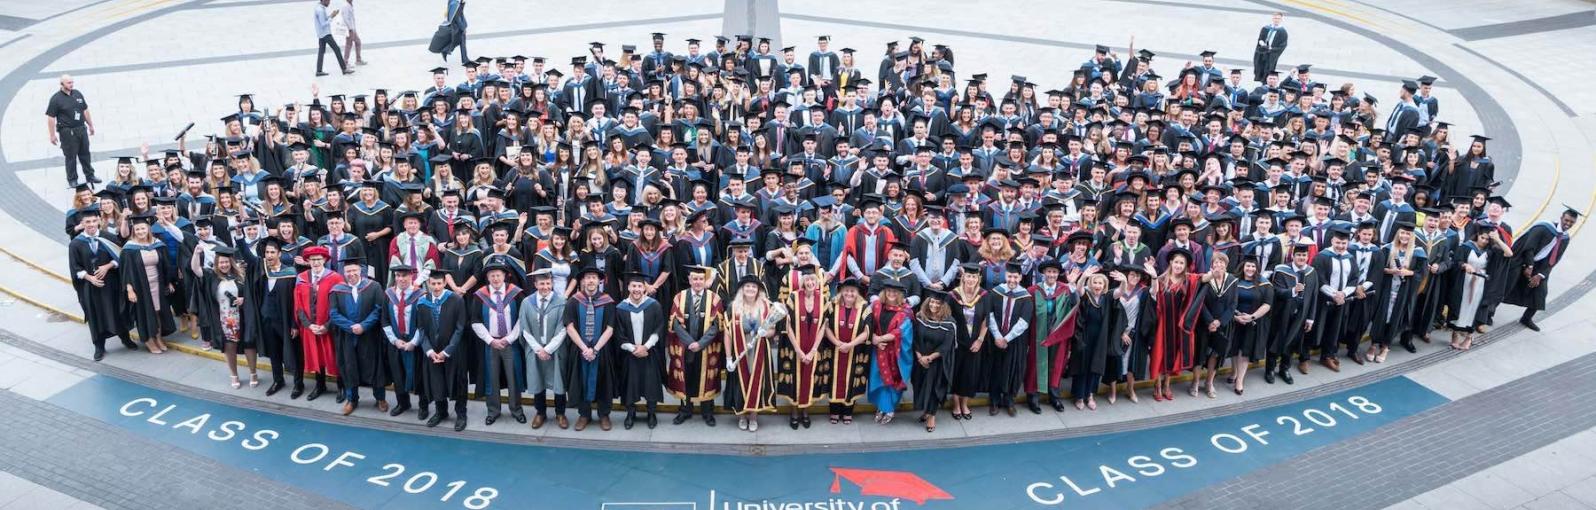 Students celebrating their graduation - University of Salford, summer 2018